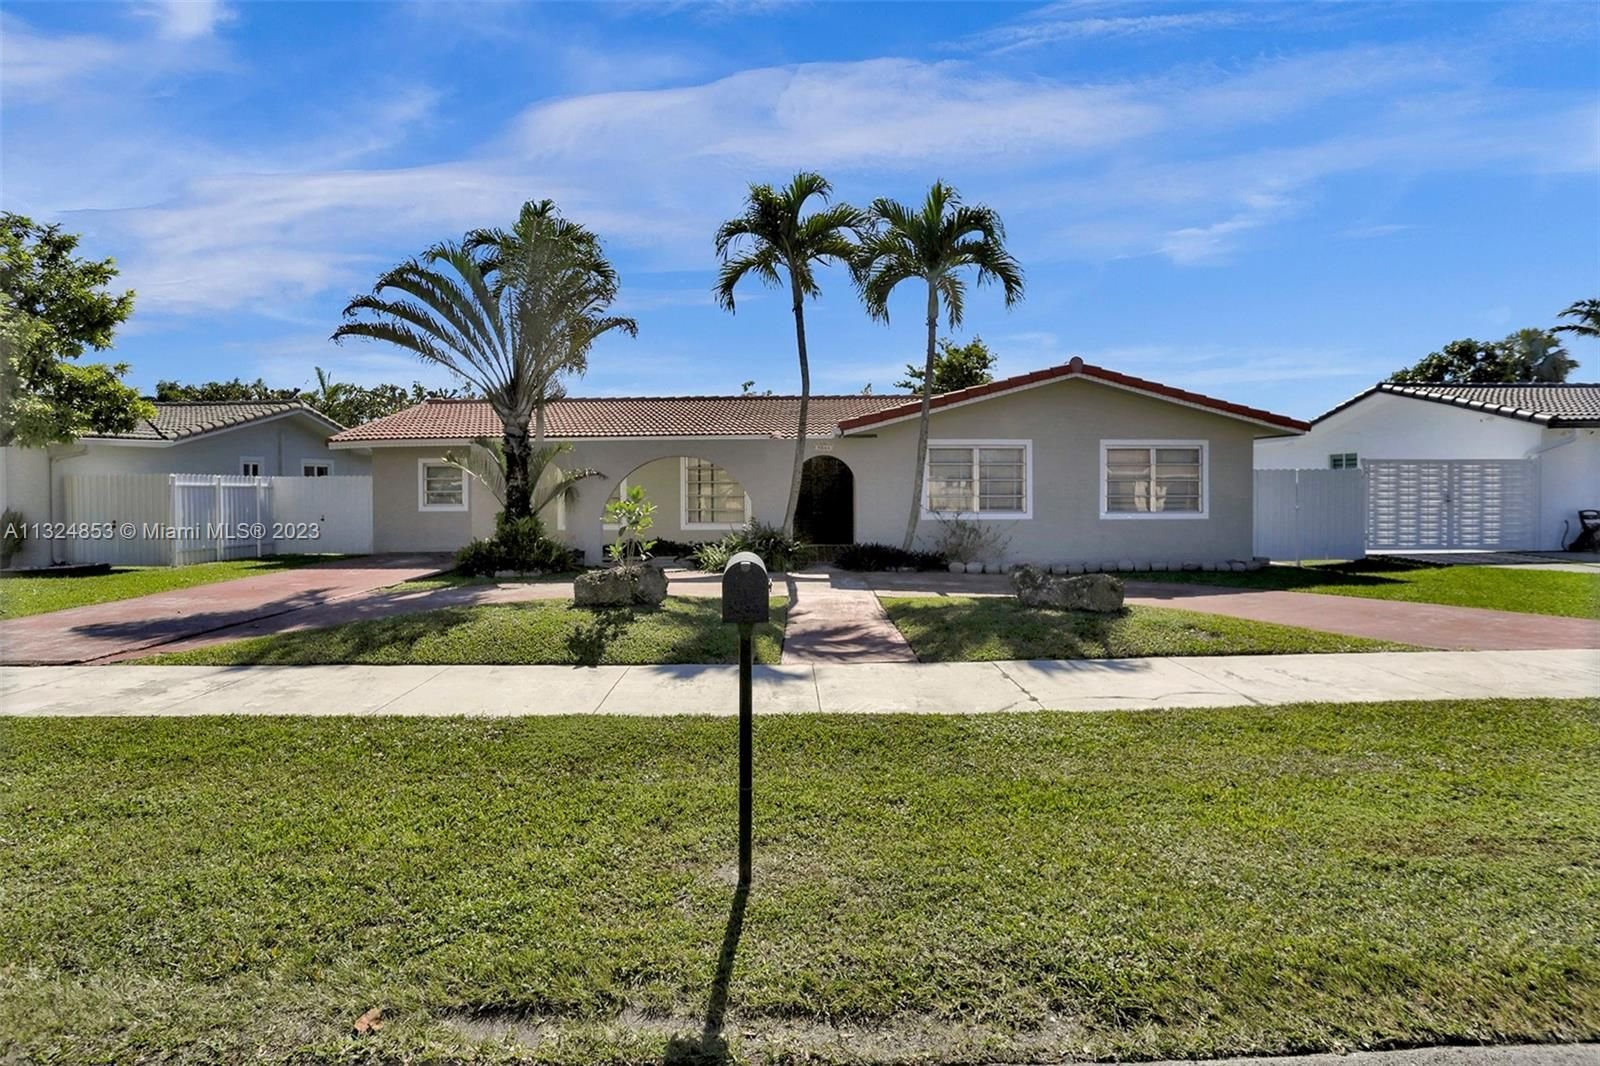 Real estate property located at 9844 26th Ter, Miami-Dade County, Miami, FL